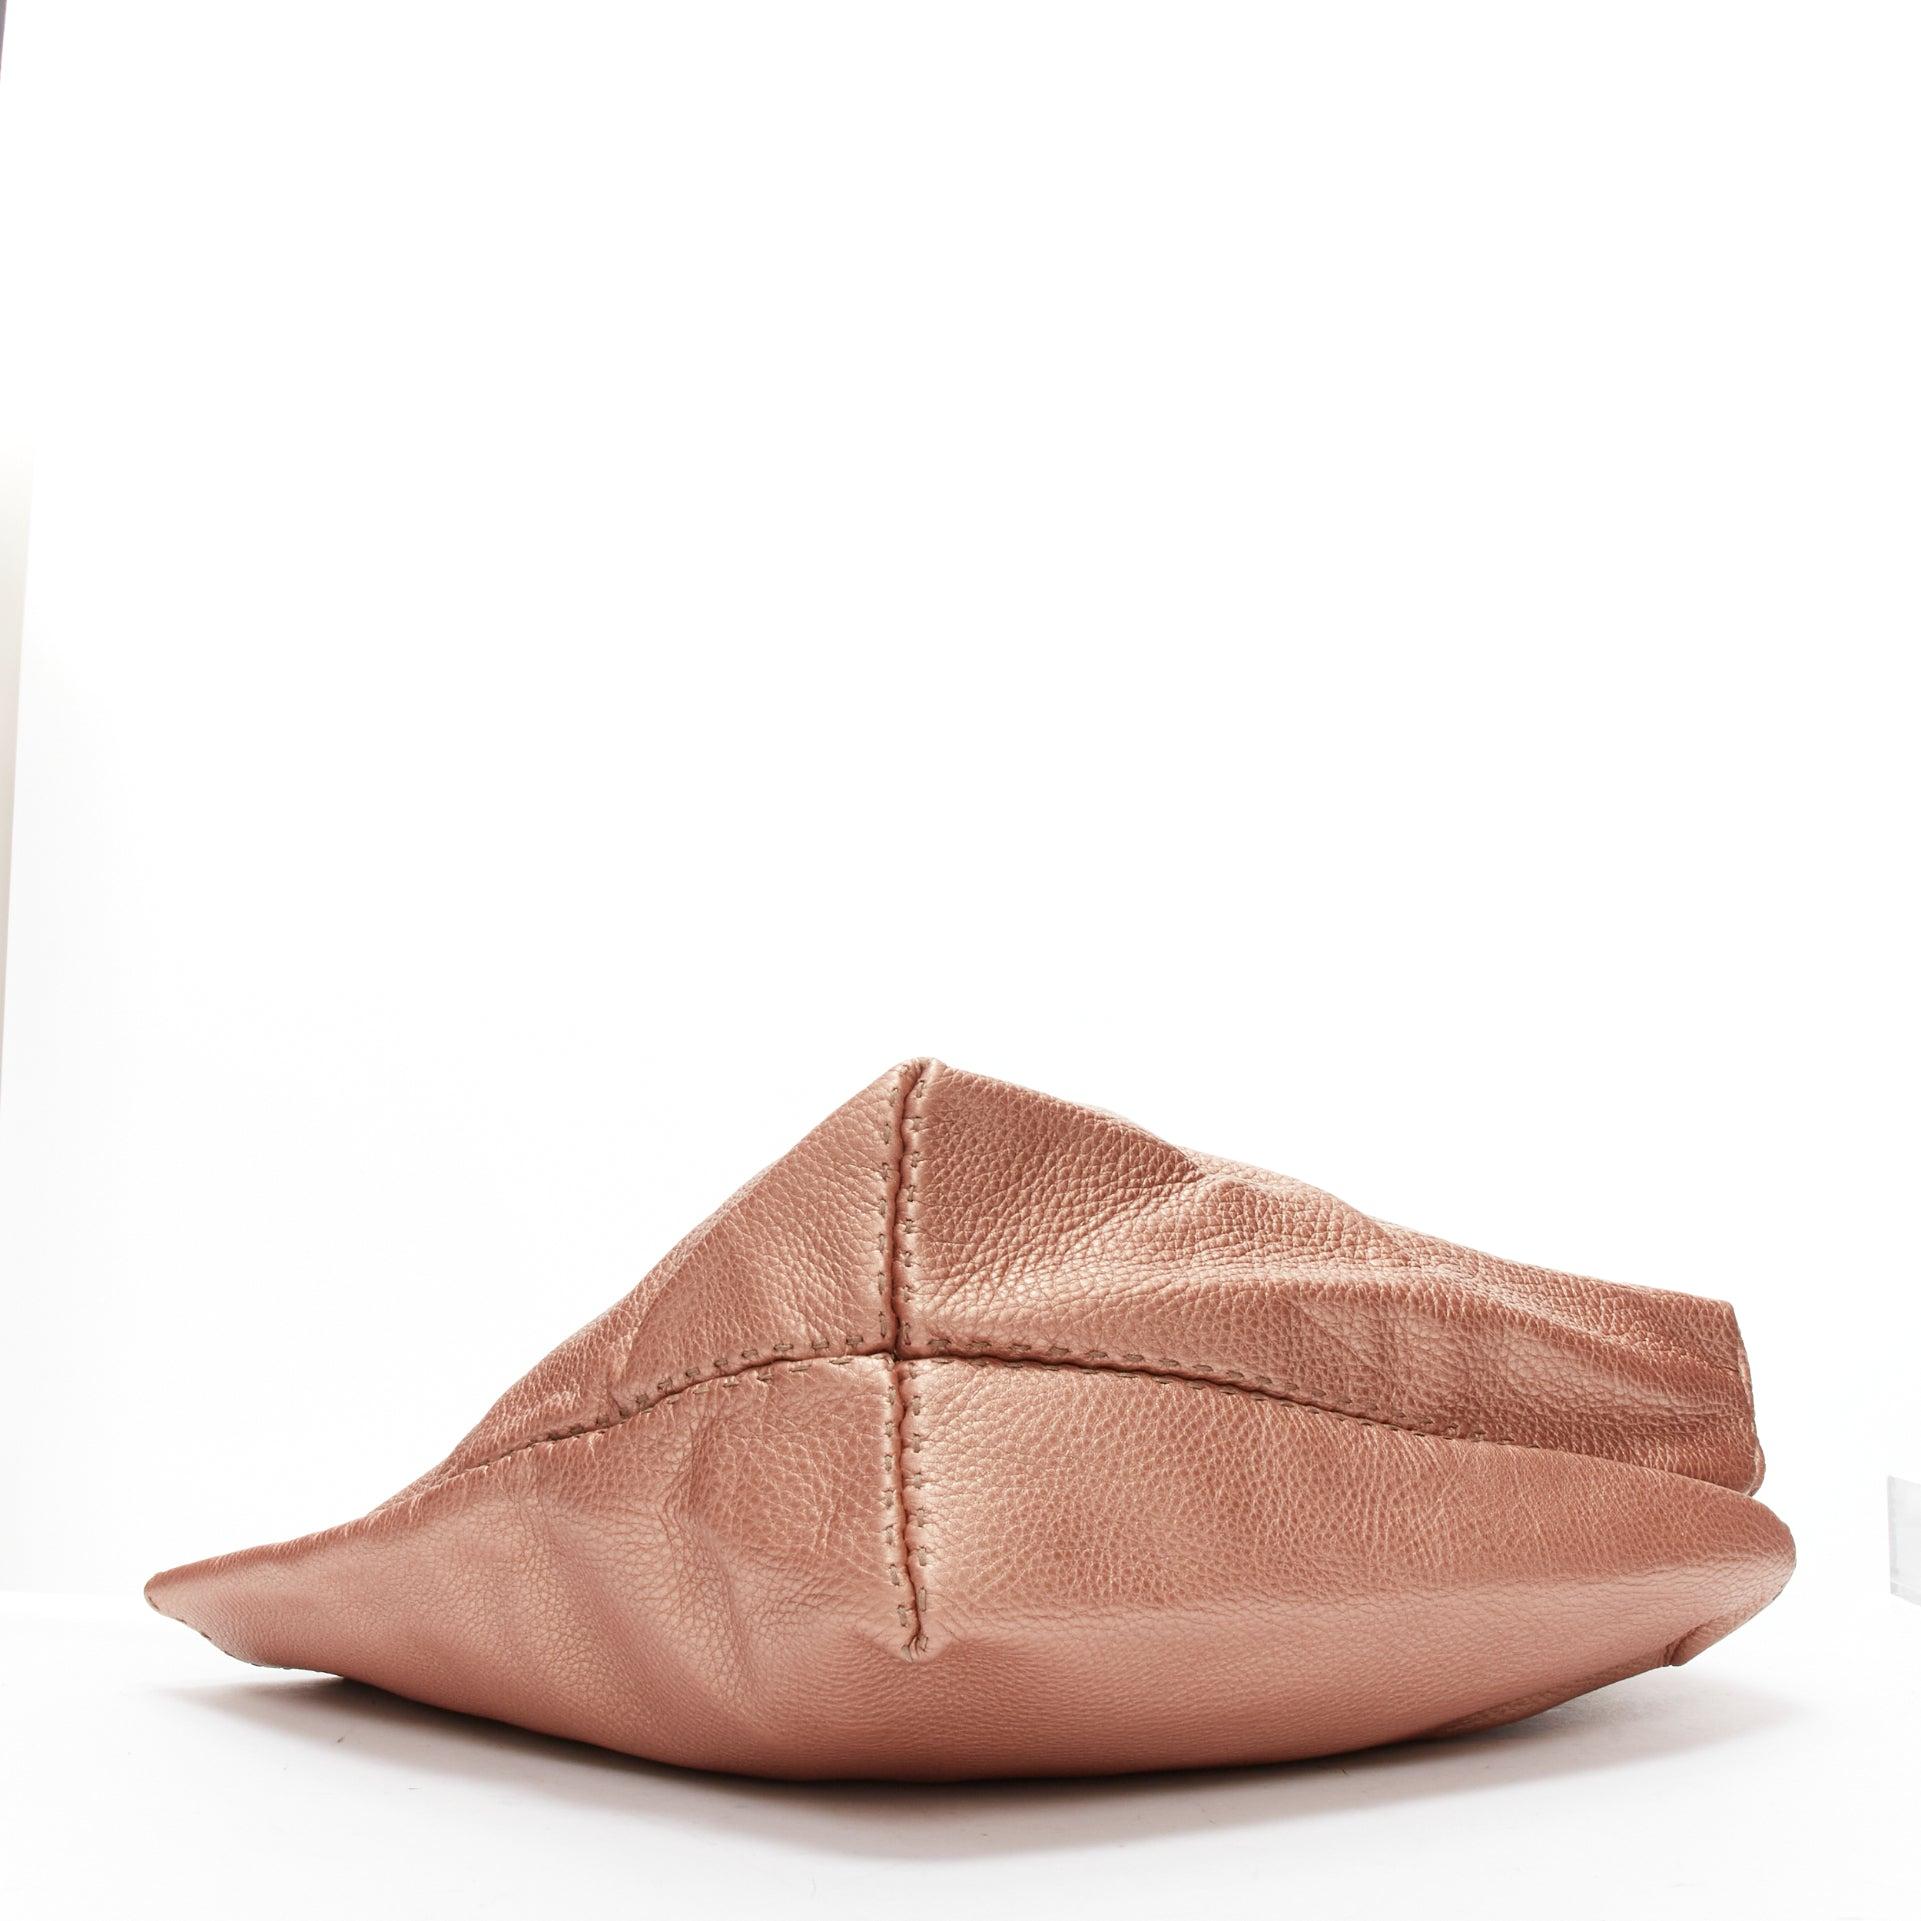 FENDI Selleria metallic rose bronze grained leather signature stitch tote bag For Sale 1